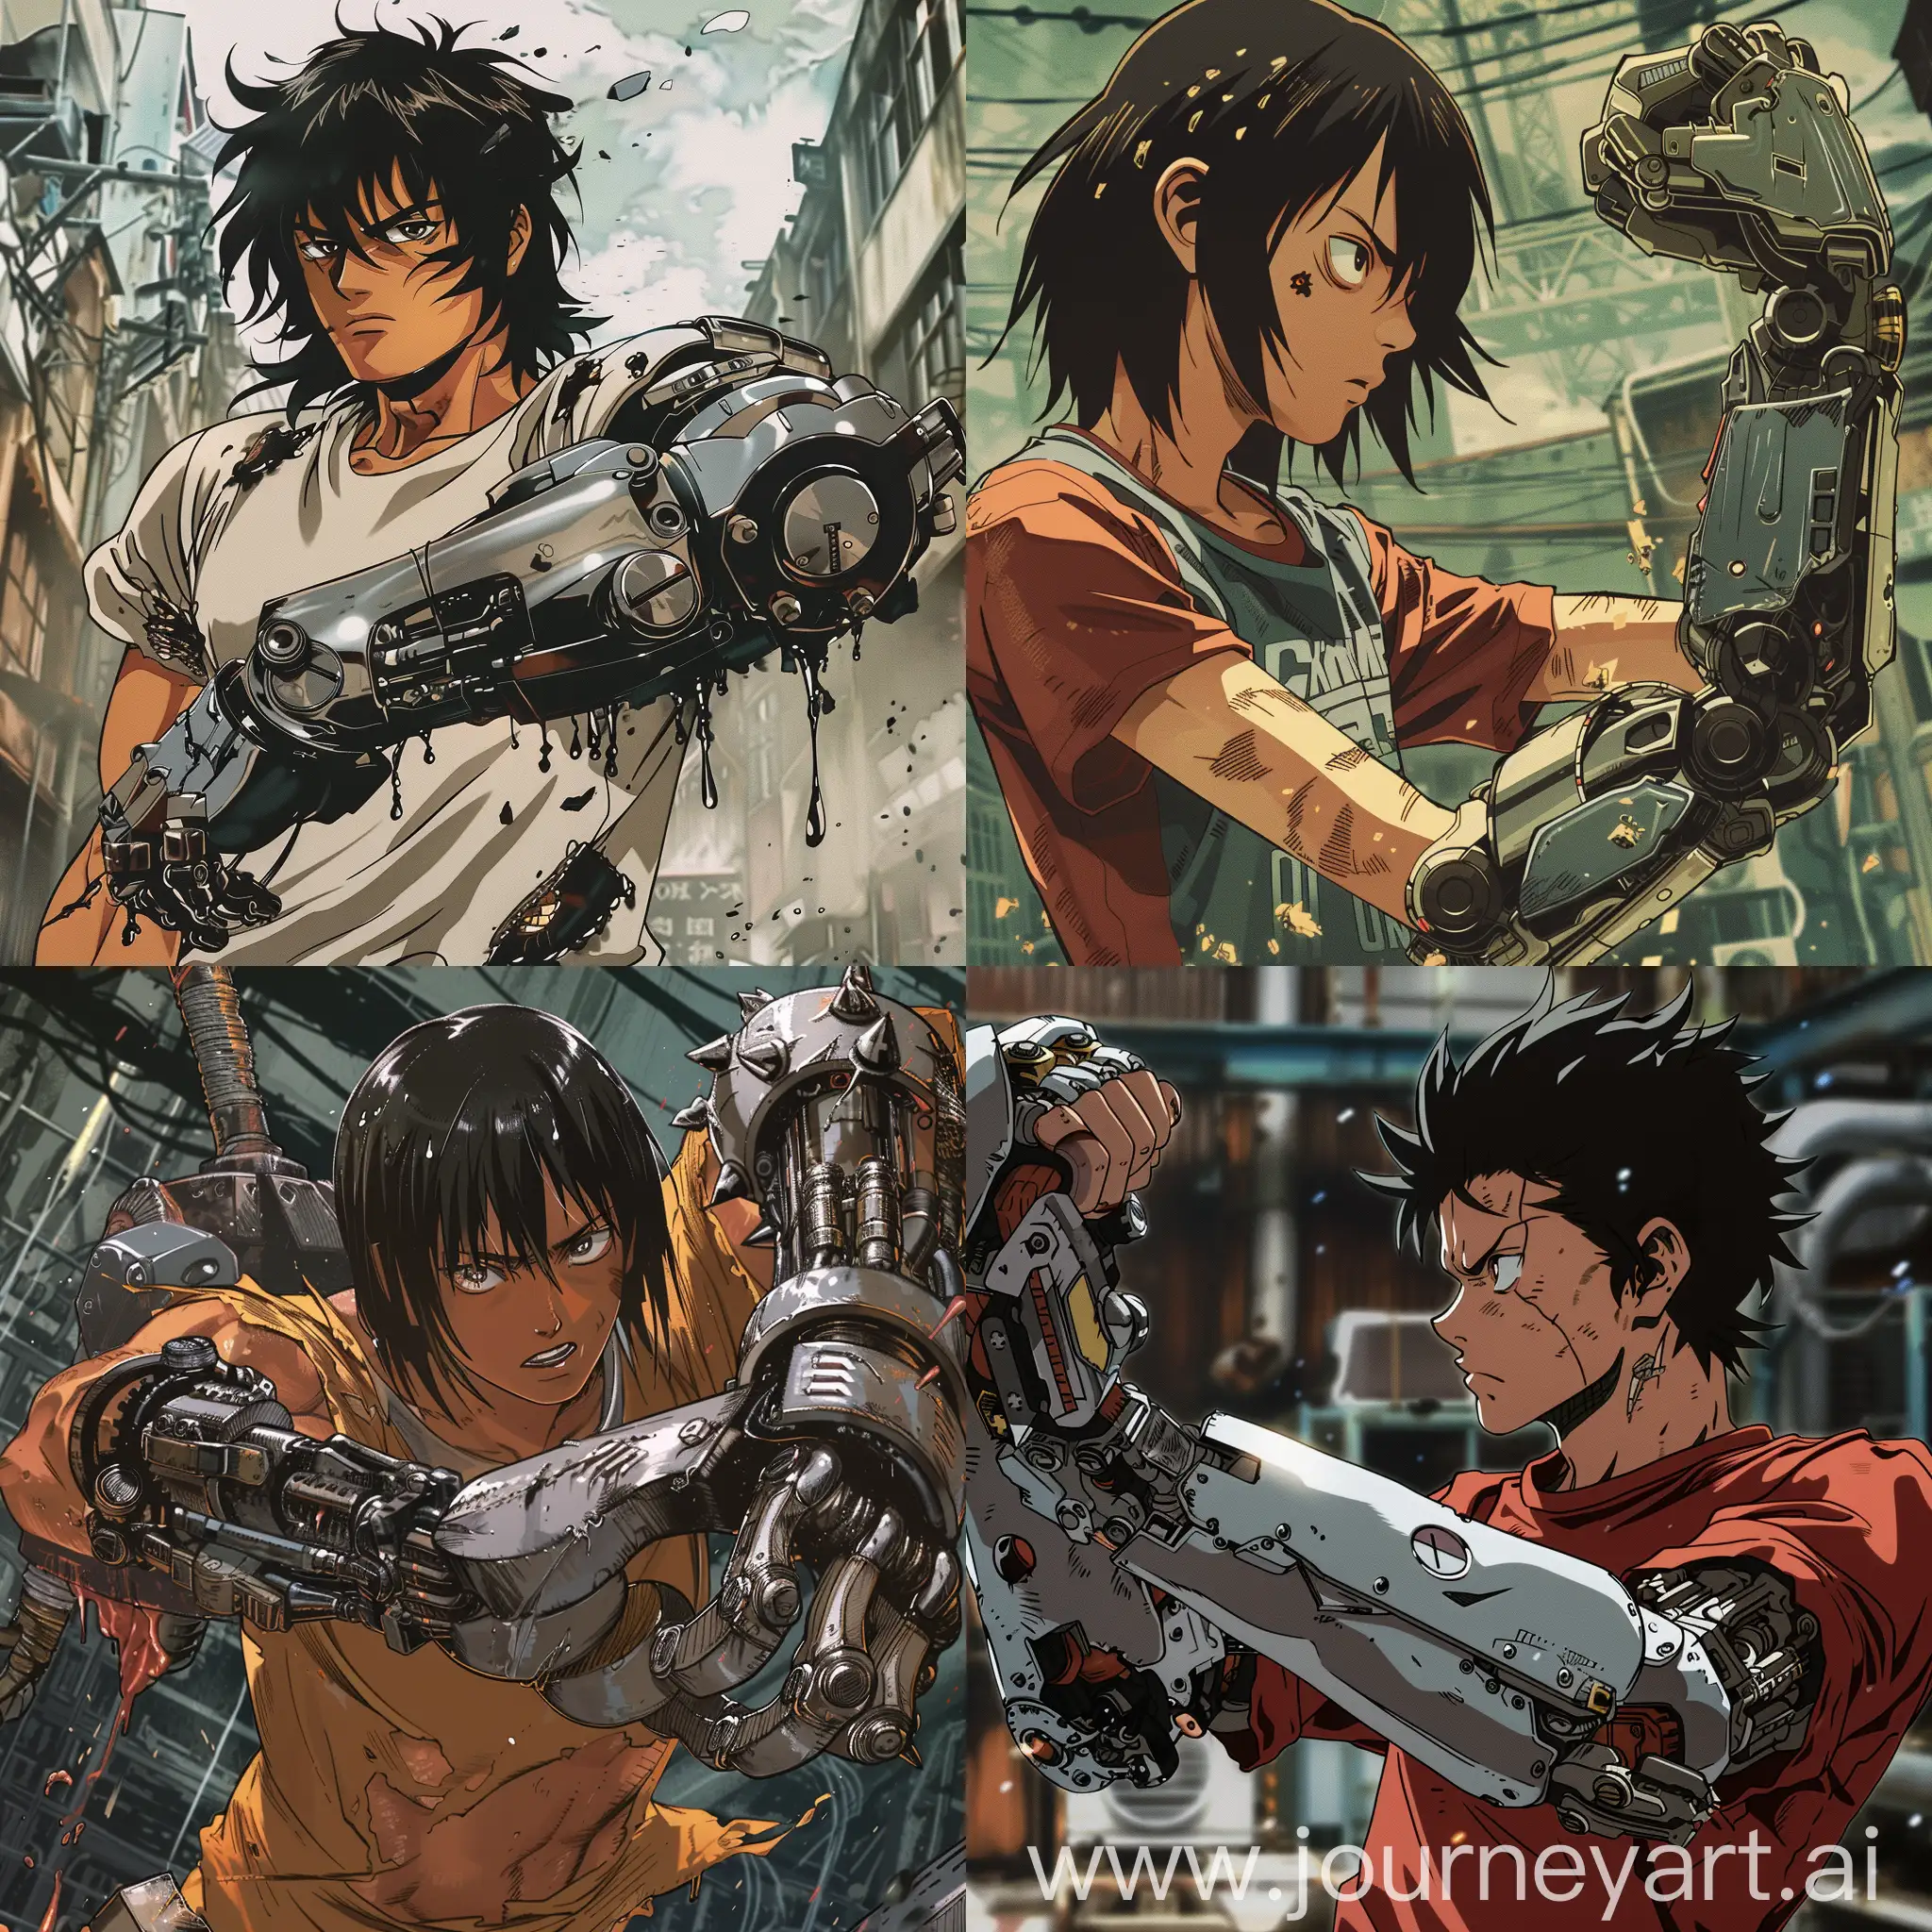 Asa-Mitaka-with-Epic-Metal-Arm-in-Chainsawman-Manga-Style